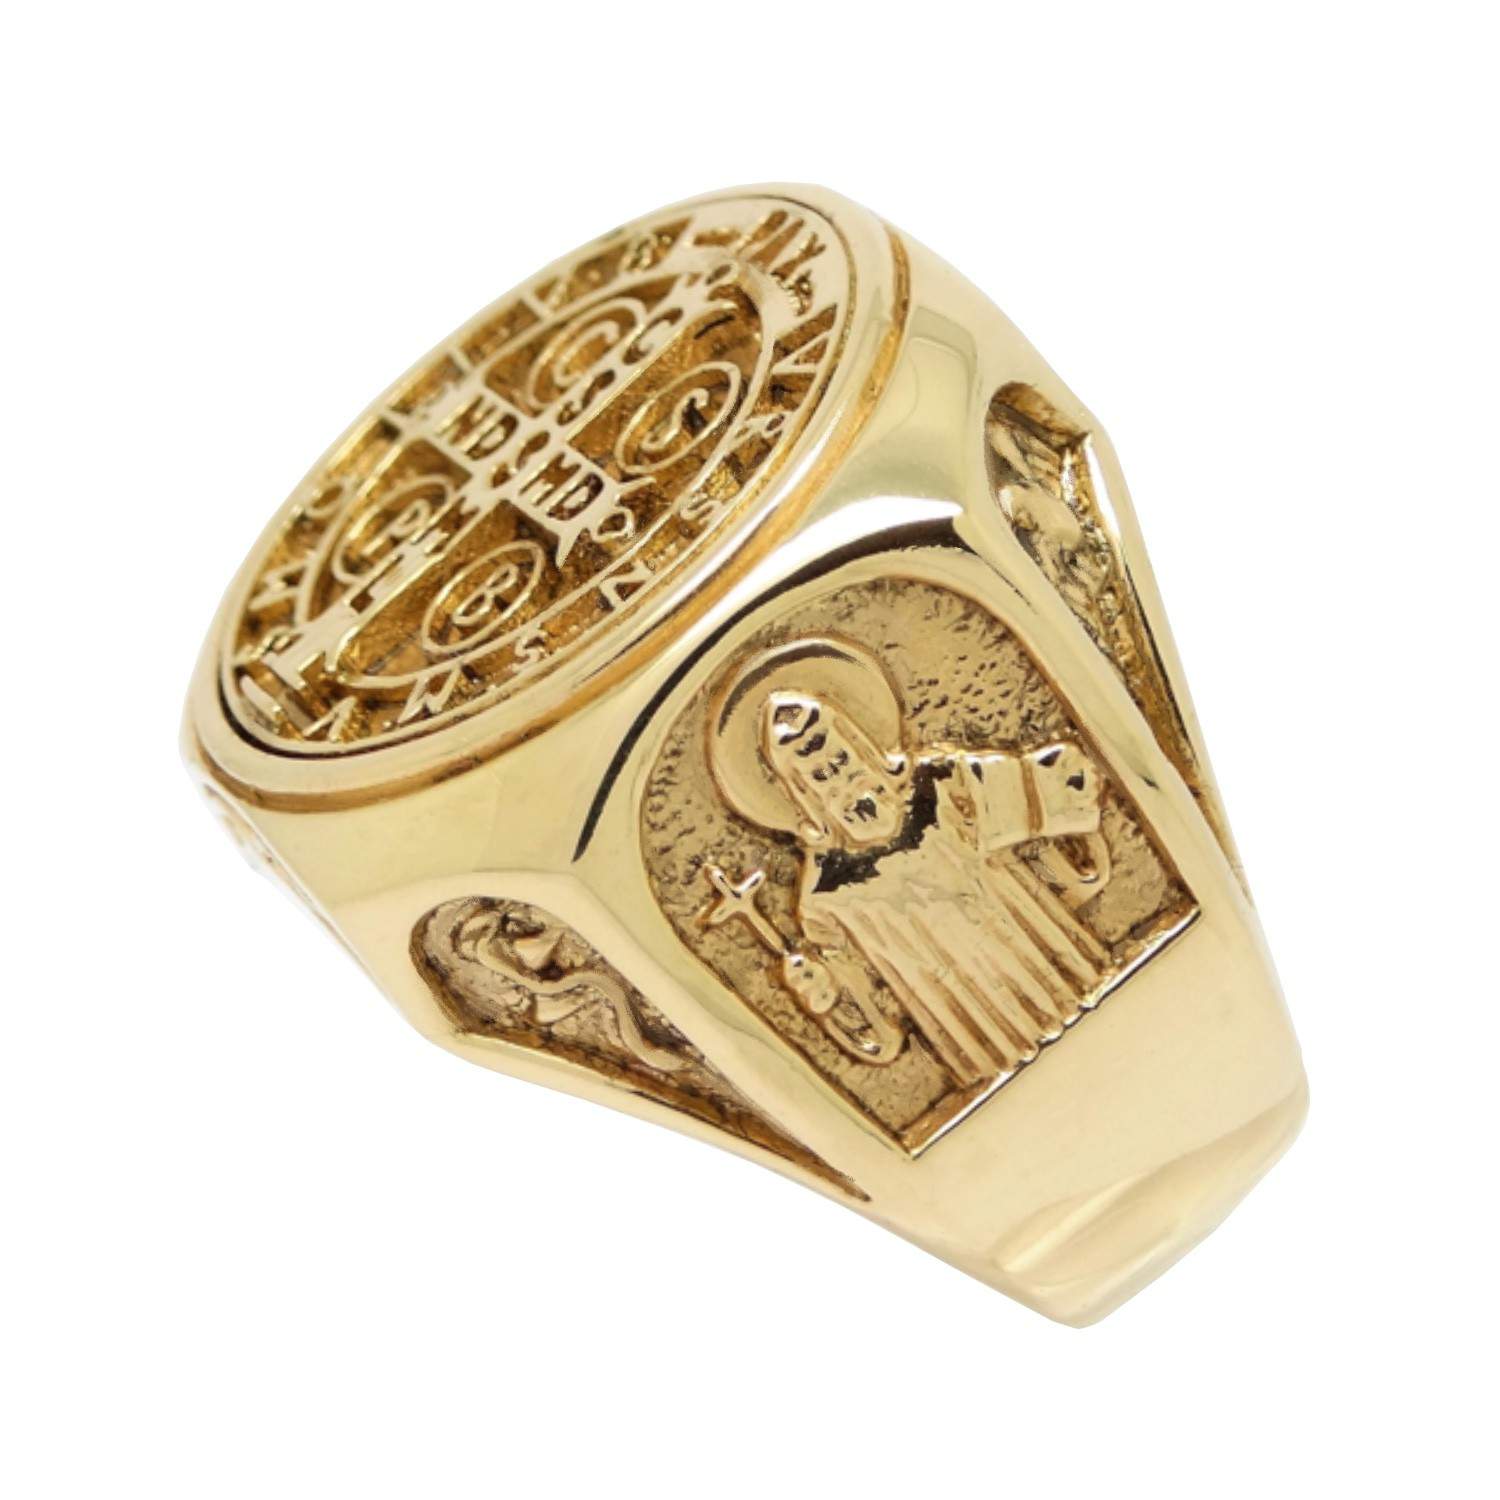 Hand of Jesus Ring for Men Catholic Christian Brass Jewelry Size 6-15  BR-103 (6)|Amazon.com